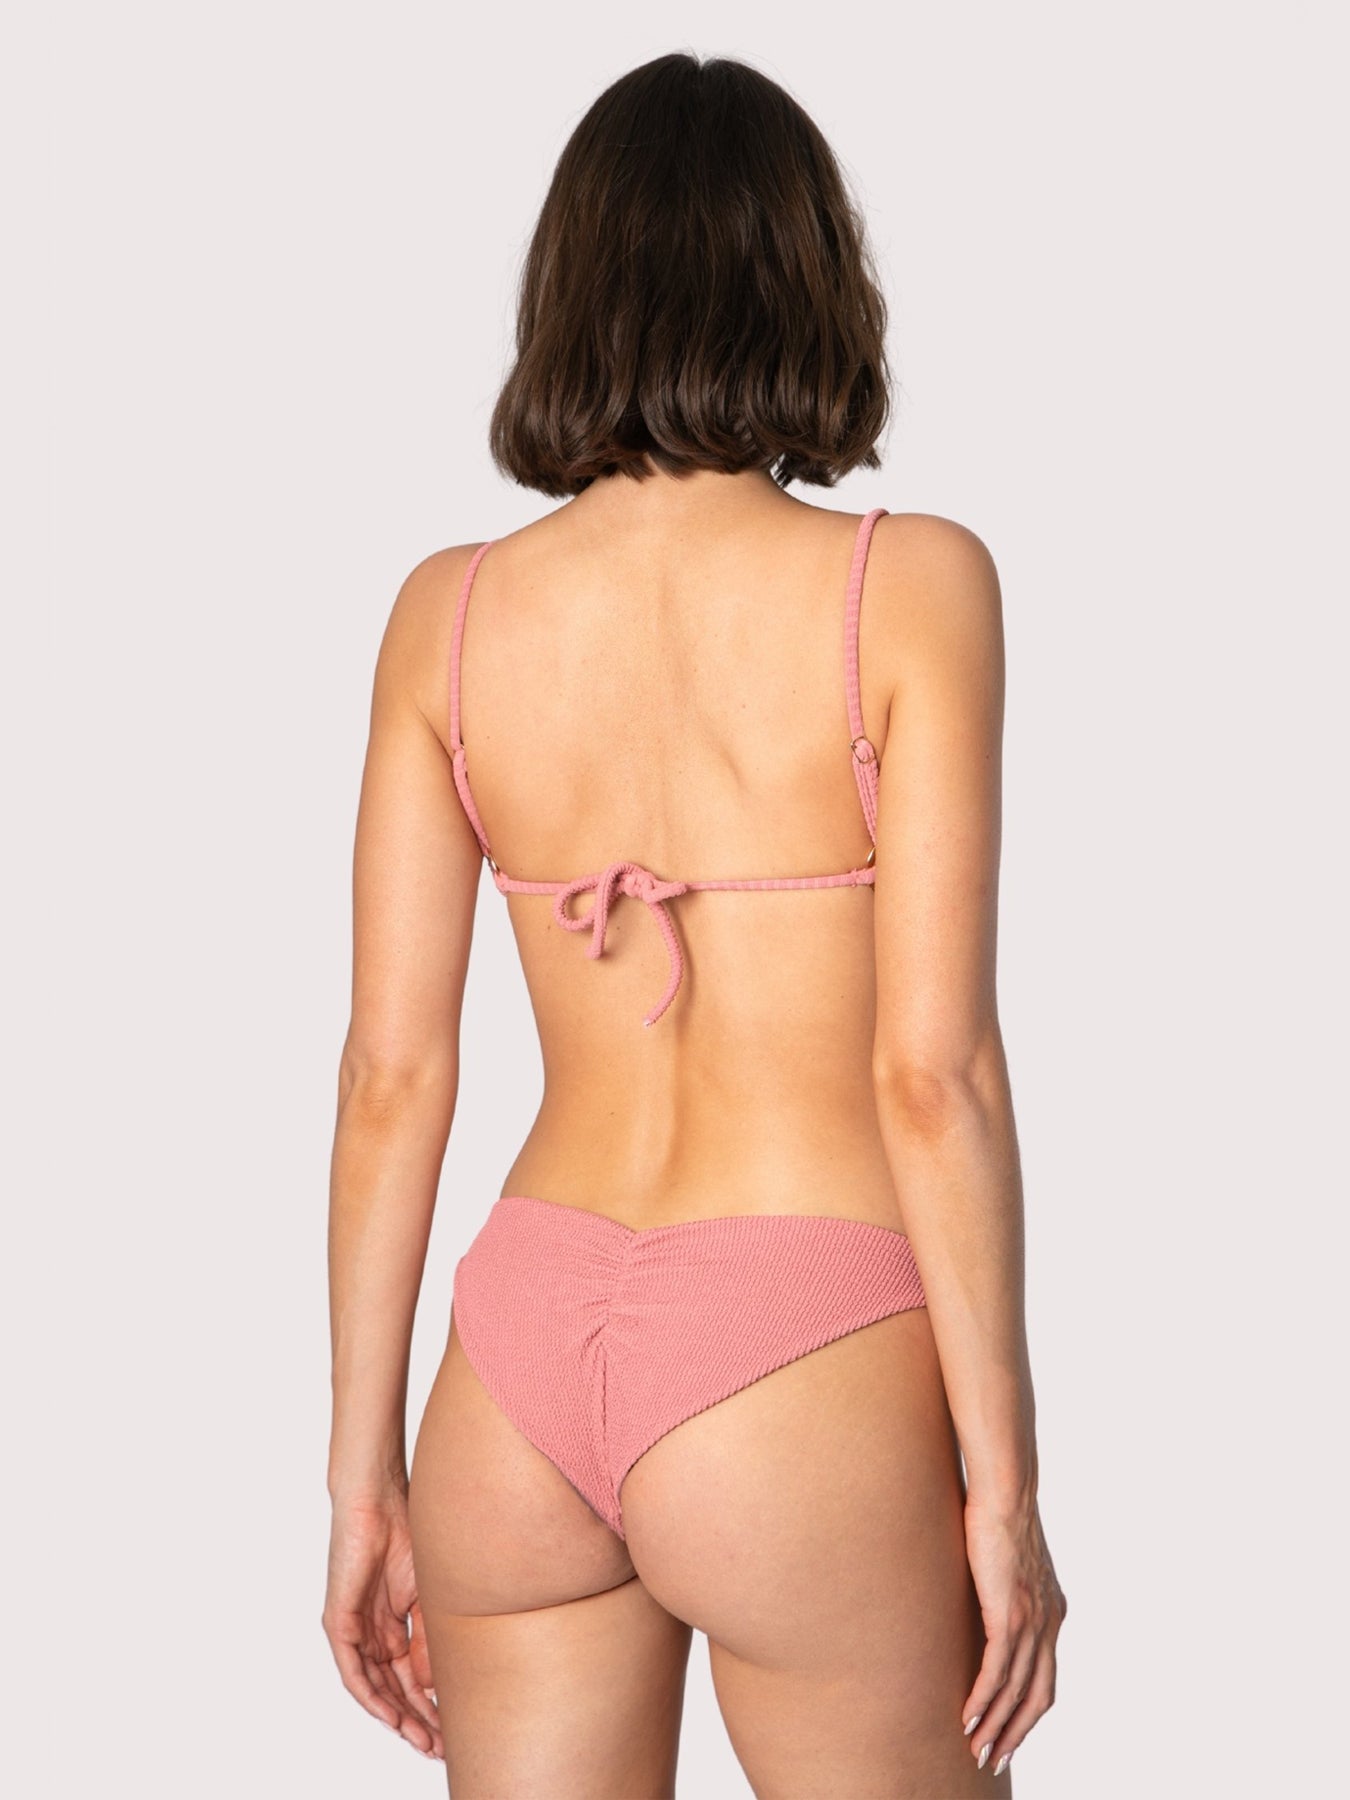 Bikini Swimwear & Beachwear: Tops & Bottoms